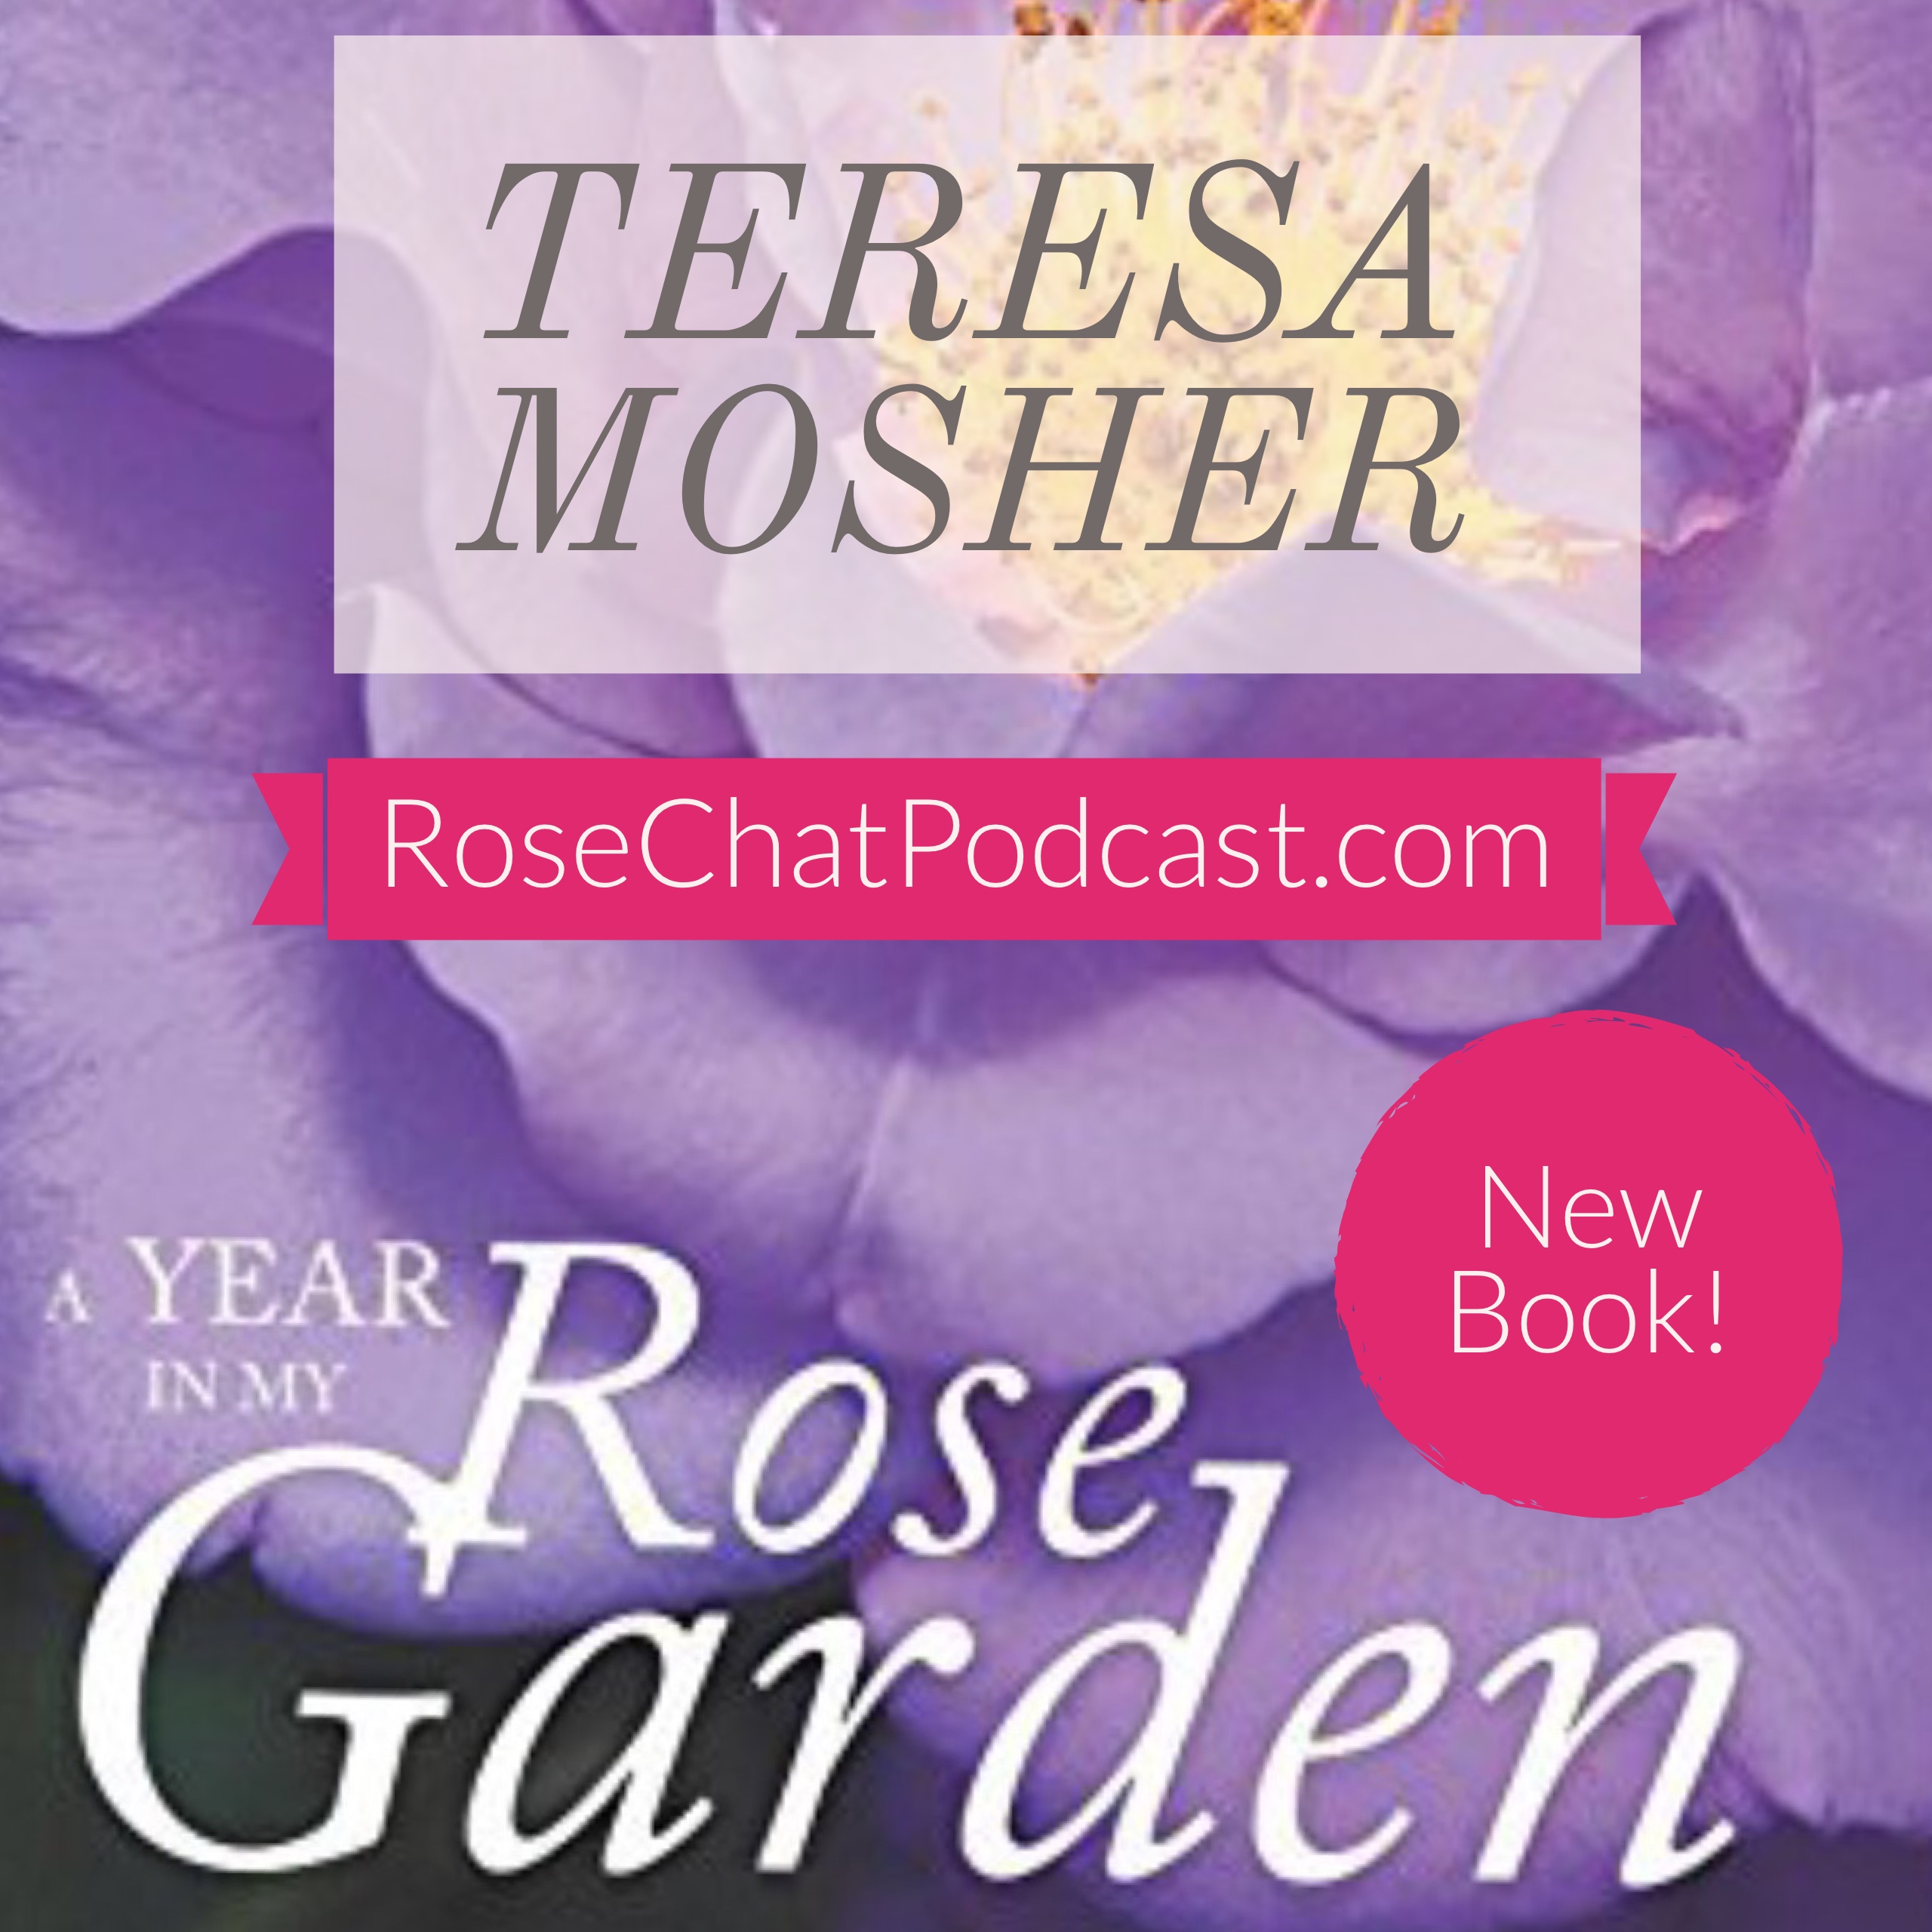 A Year In My Rose Garden - Teresa Mosher